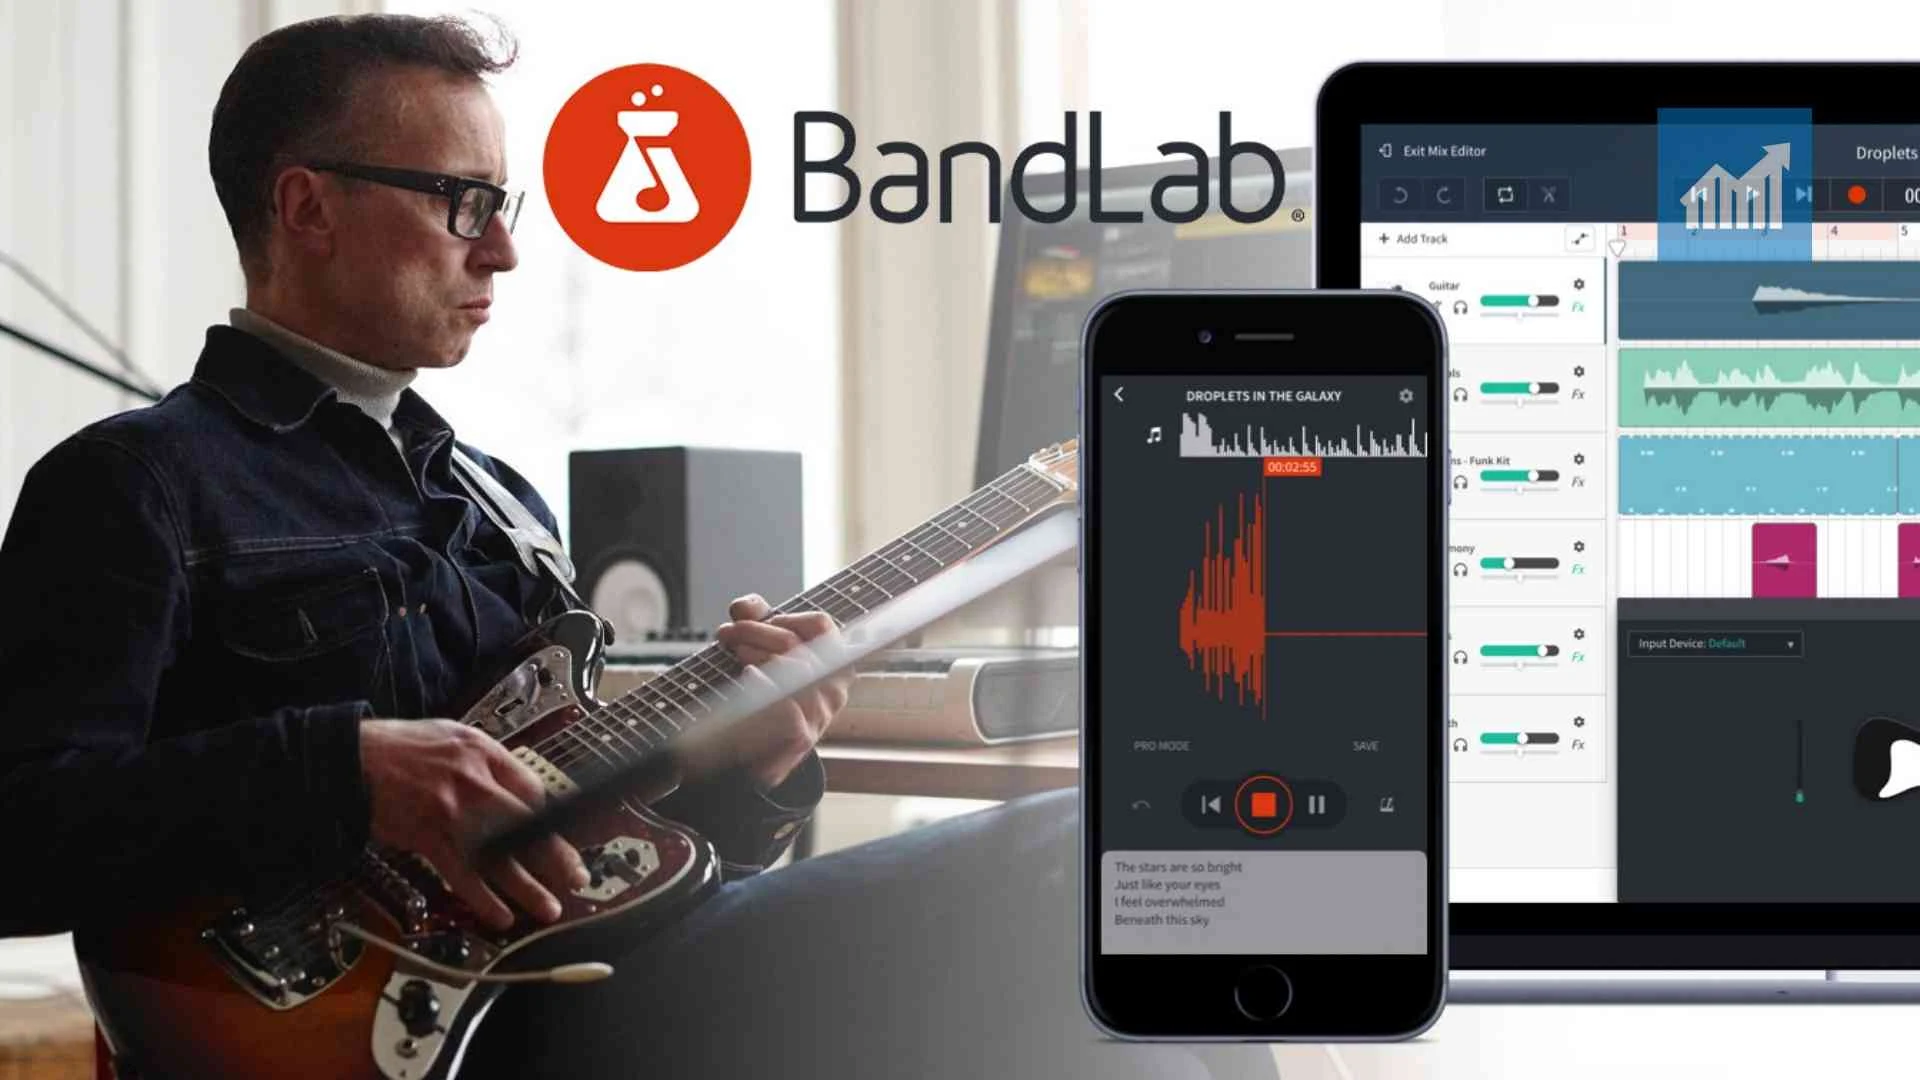 BandLab Singapore - Social Music Platform Raises $53 Million Series B Led by Vulcan Capital